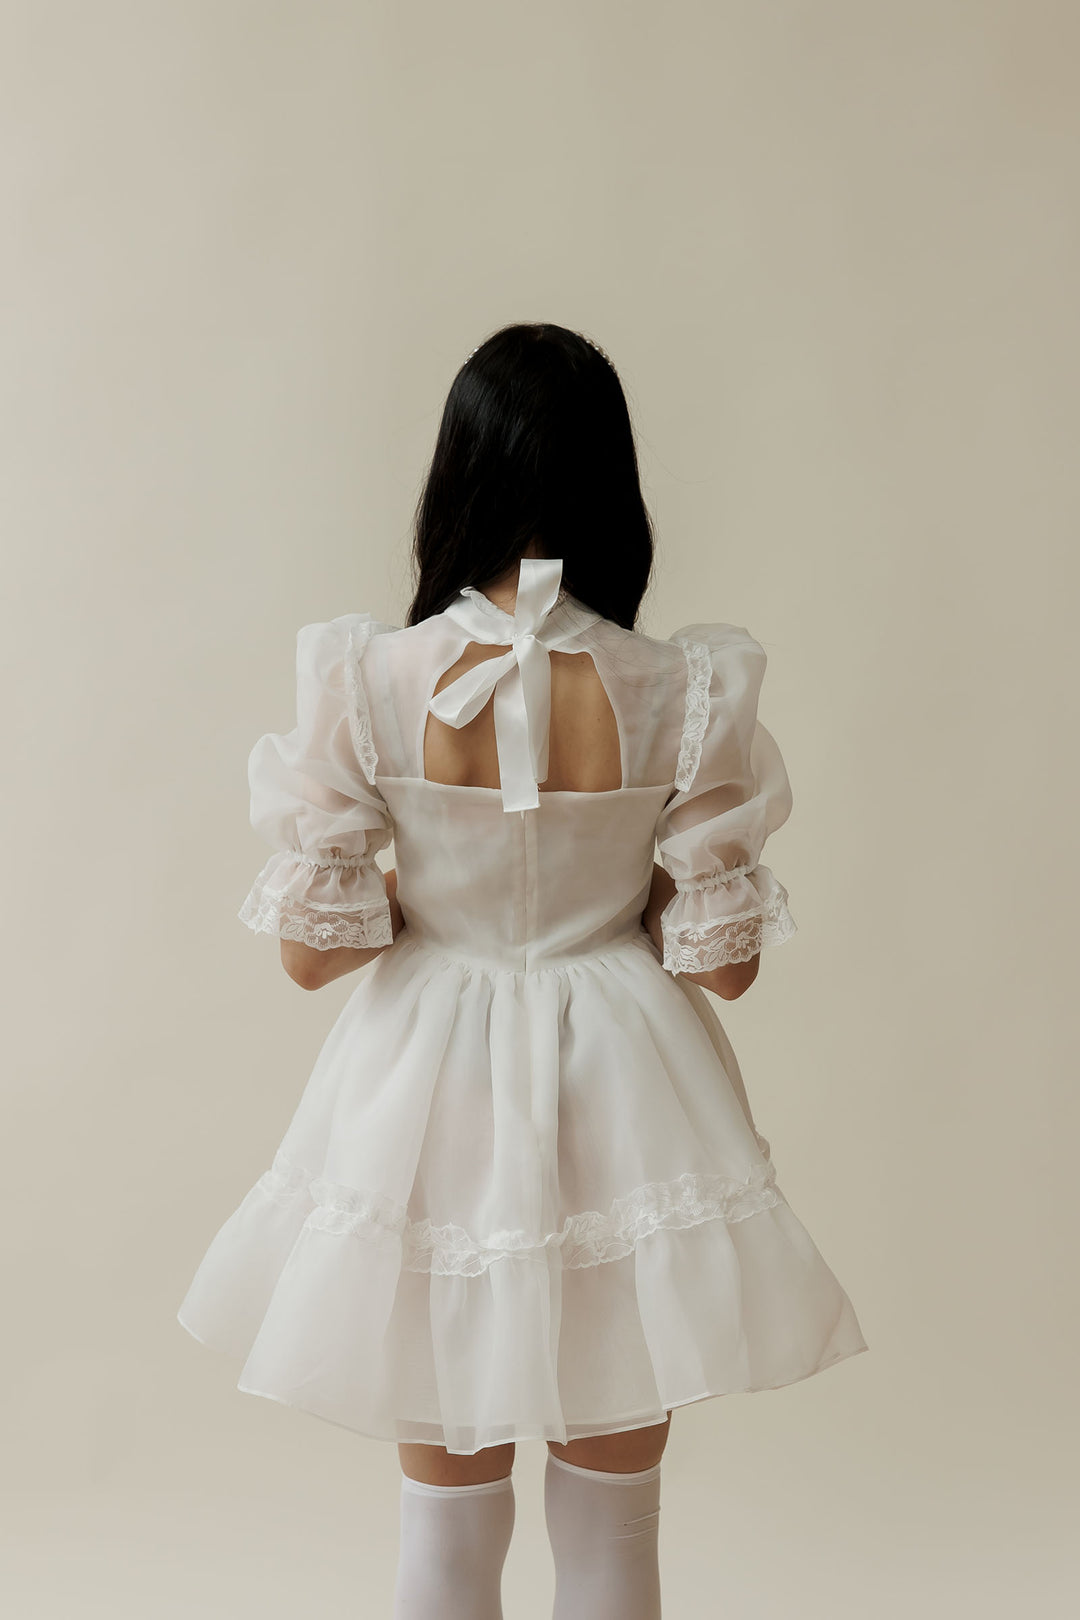 The Ivory 18th Dress